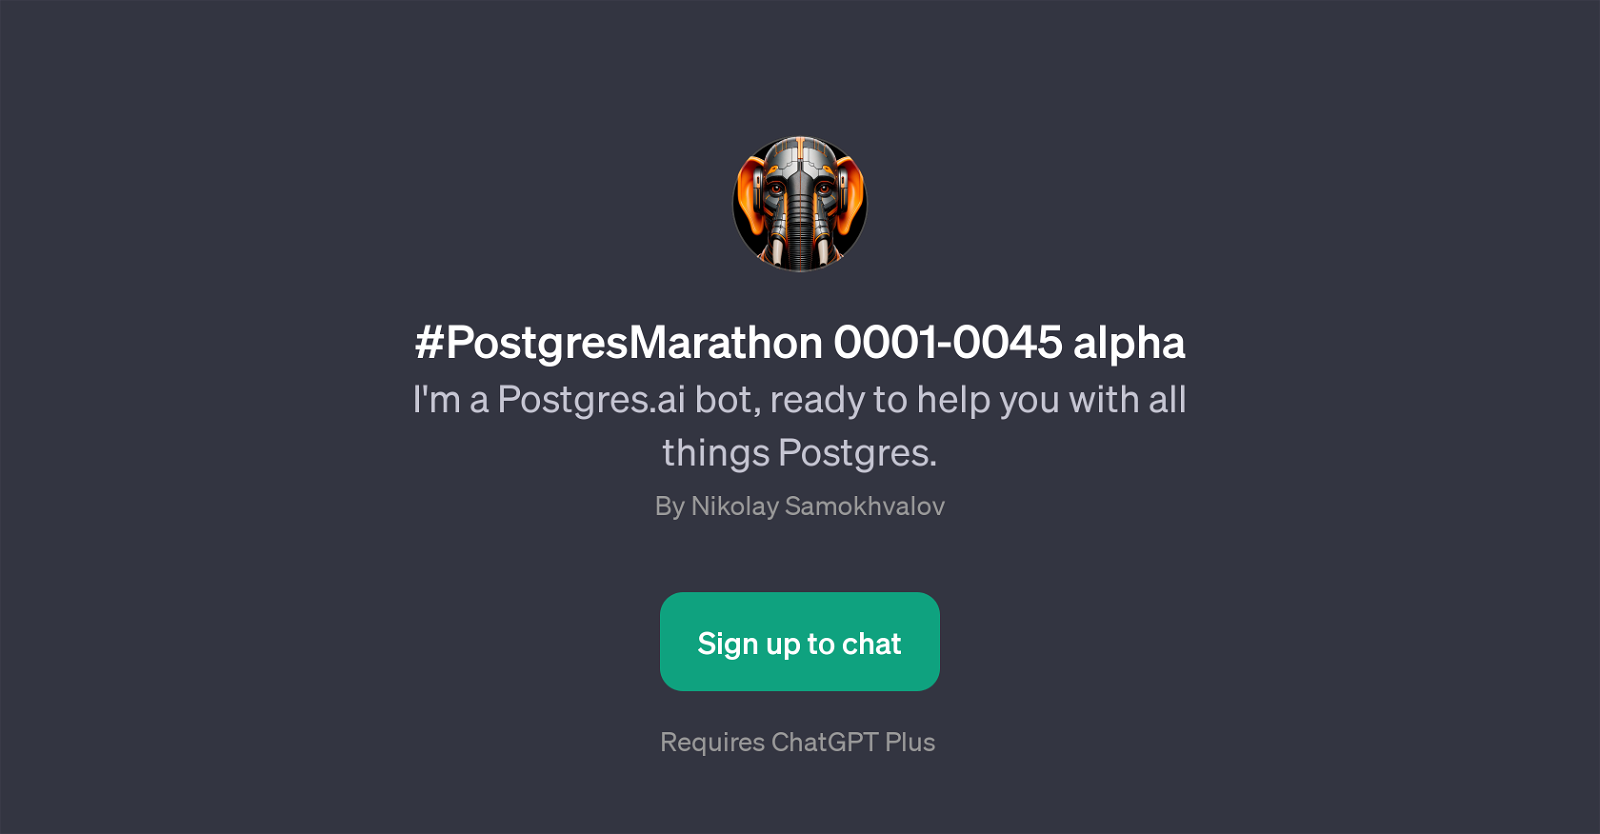 #PostgresMarathon 0001-0045 alpha website